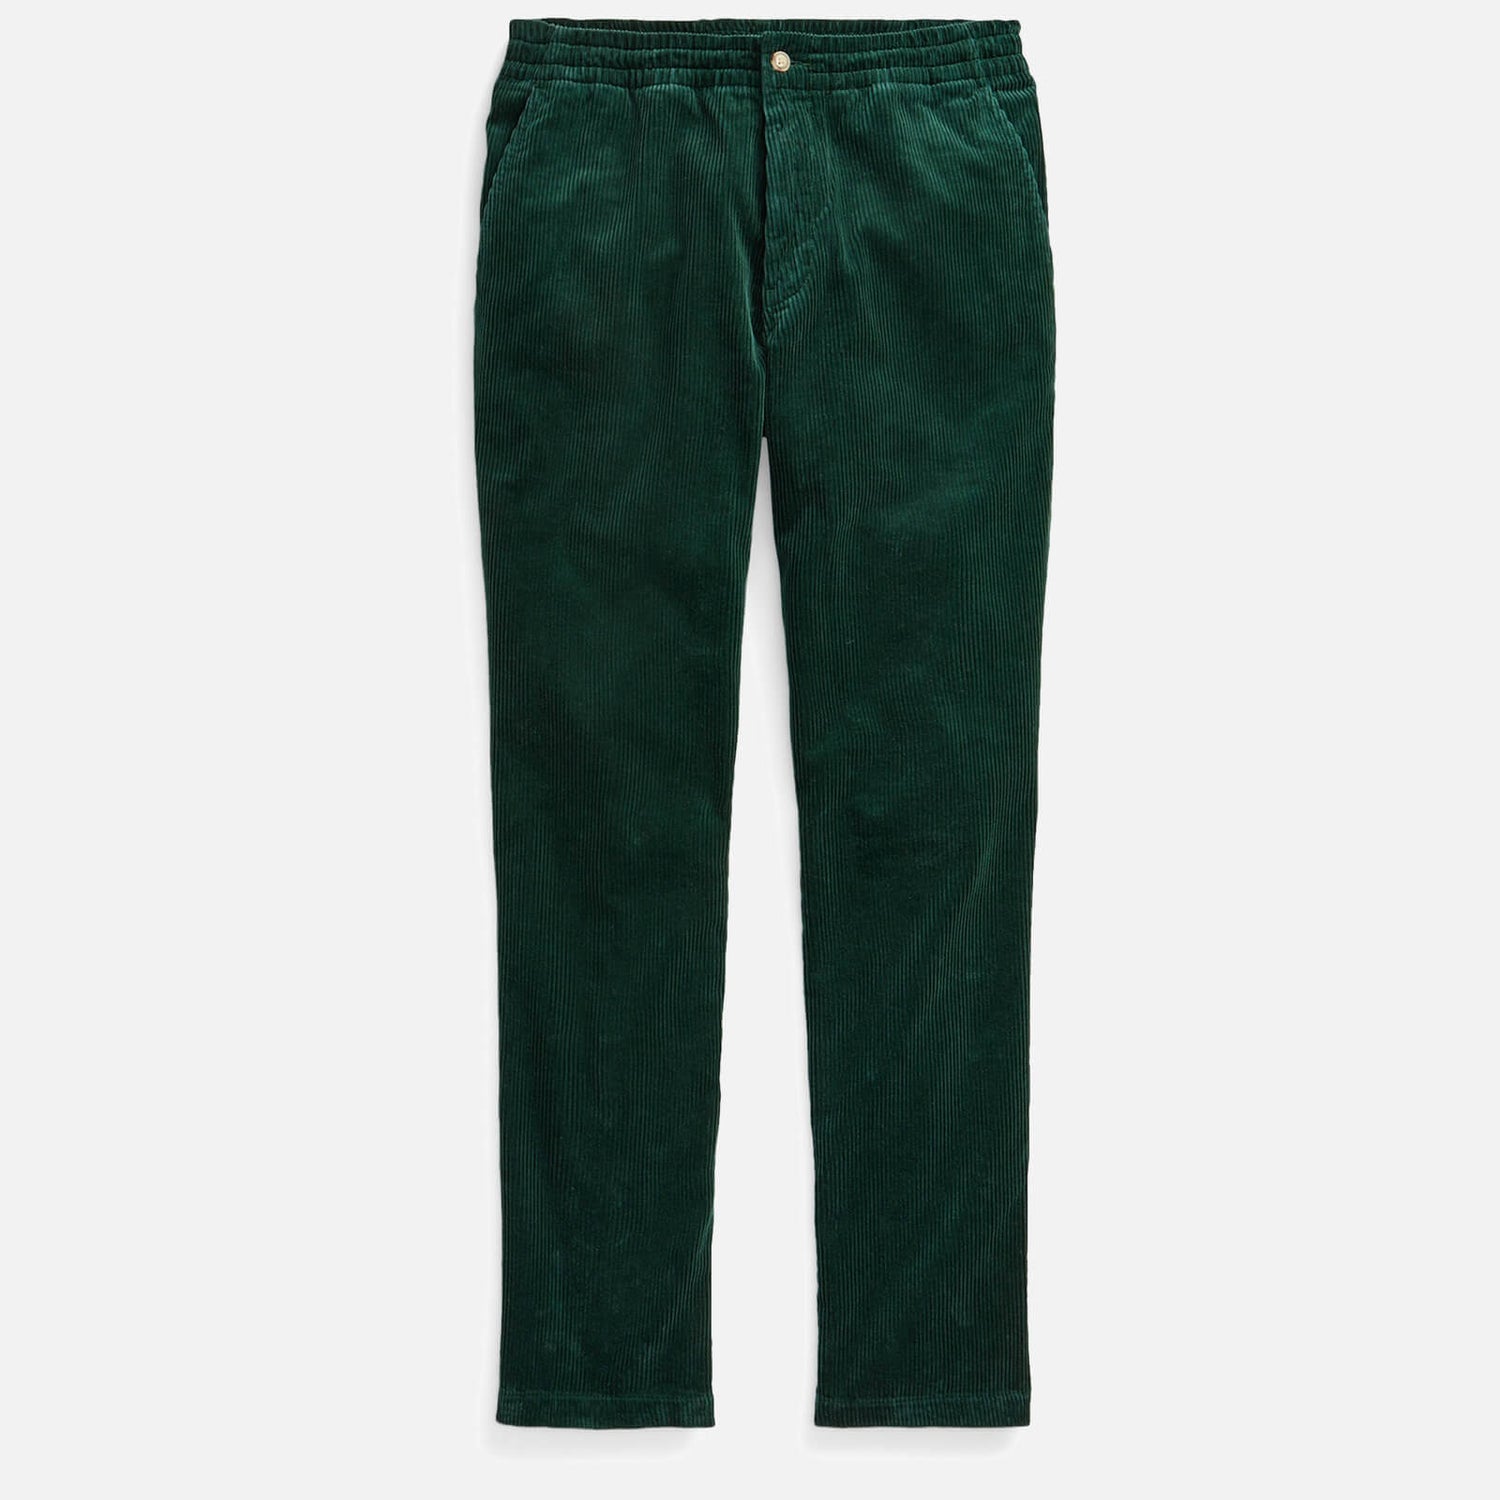 Polo Ralph Lauren Men's Corduroy Prepster Trousers - College Green - S